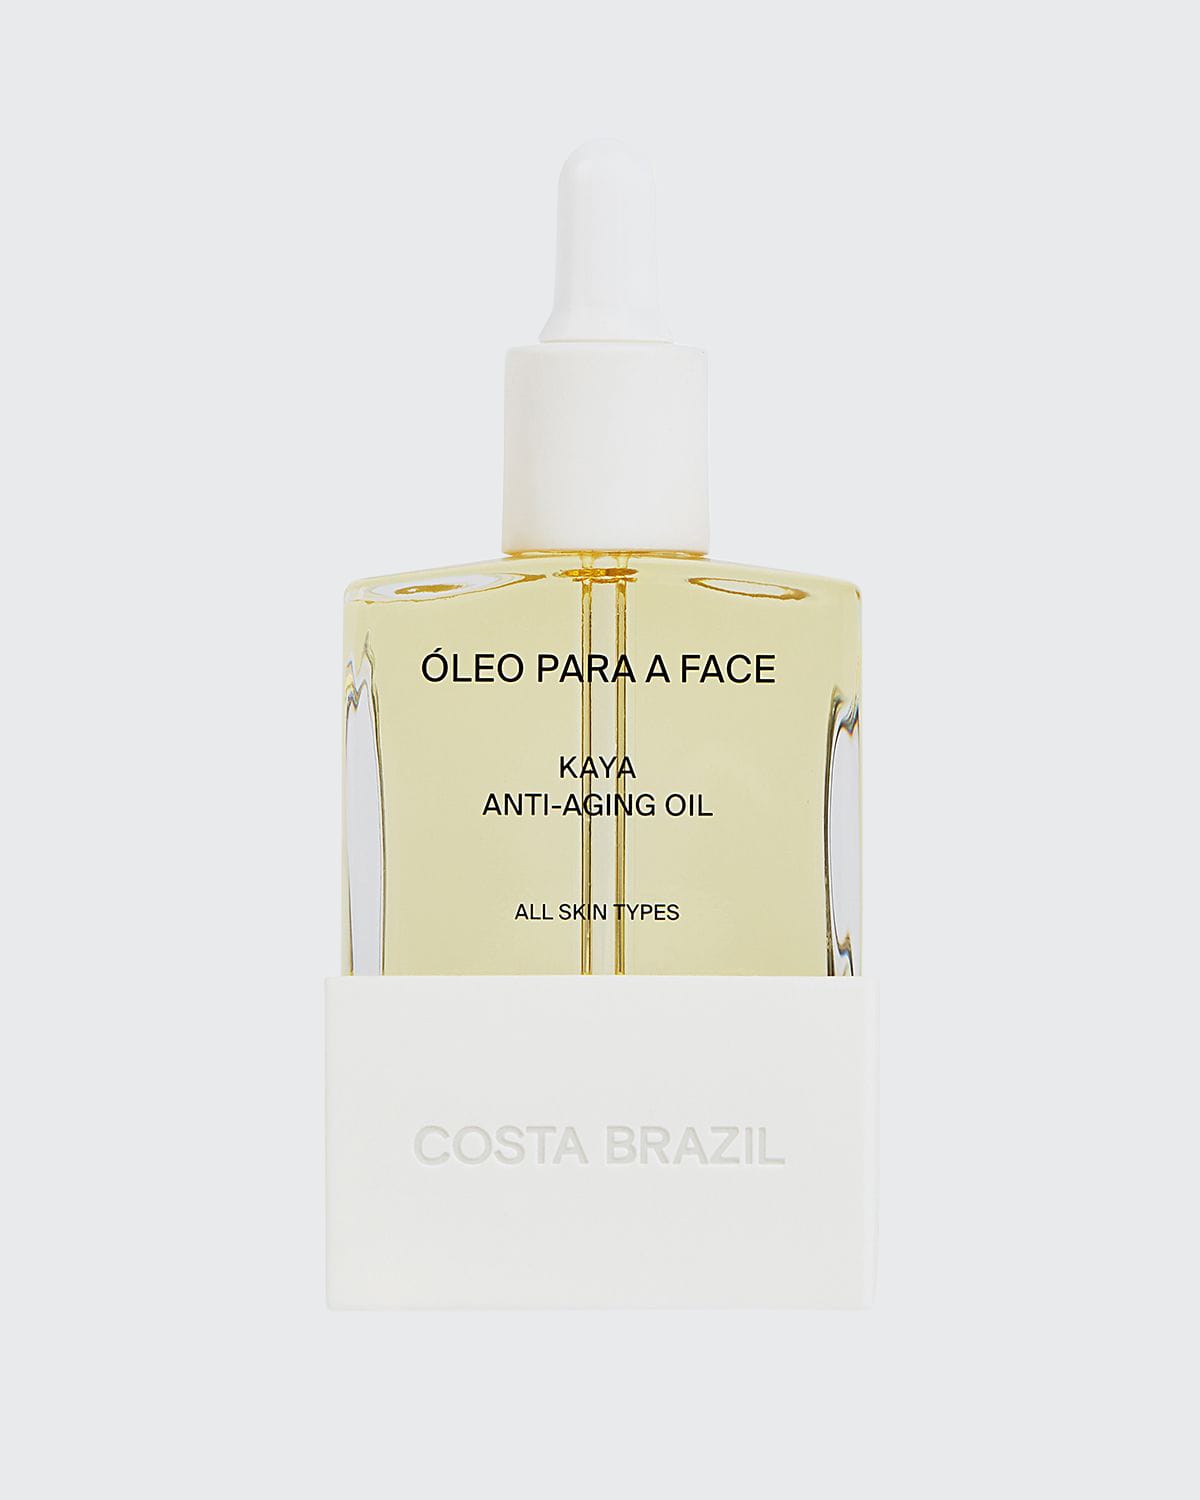 Costa Brazil Oleo Para a Face - Kaya Anti-Aging Face Oil, 1 oz./ 30 mL